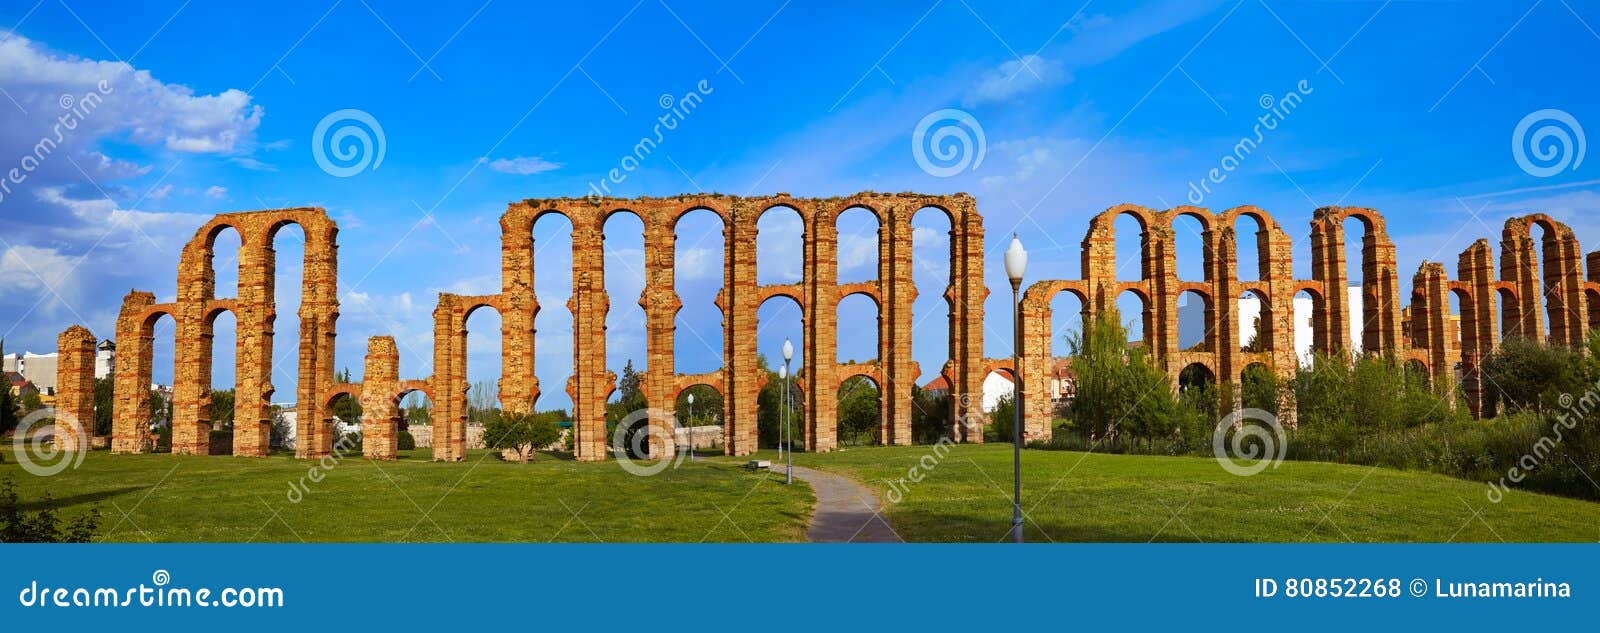 acueducto los milagros merida badajoz aqueduct